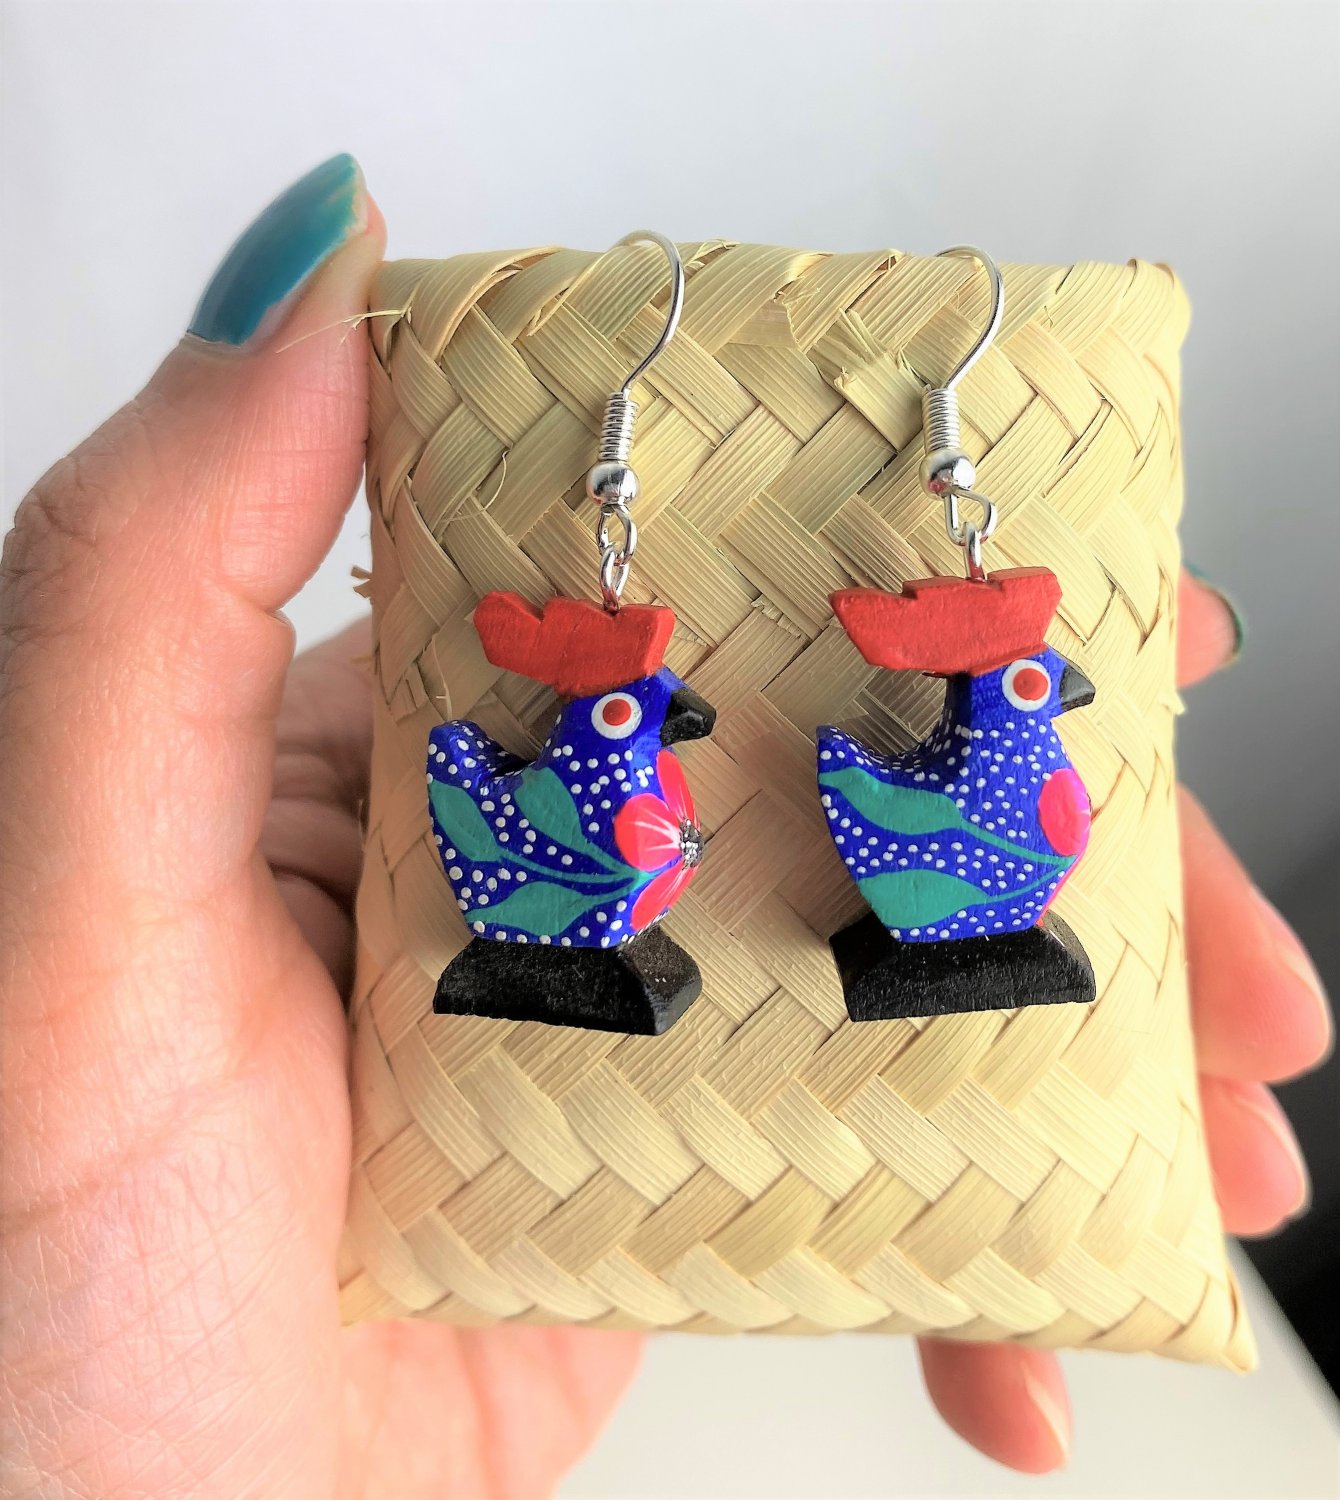 Mexican Hand-Made "Gallinita" (Hen) Alebrije Earrings in Small Palm Box - Blue